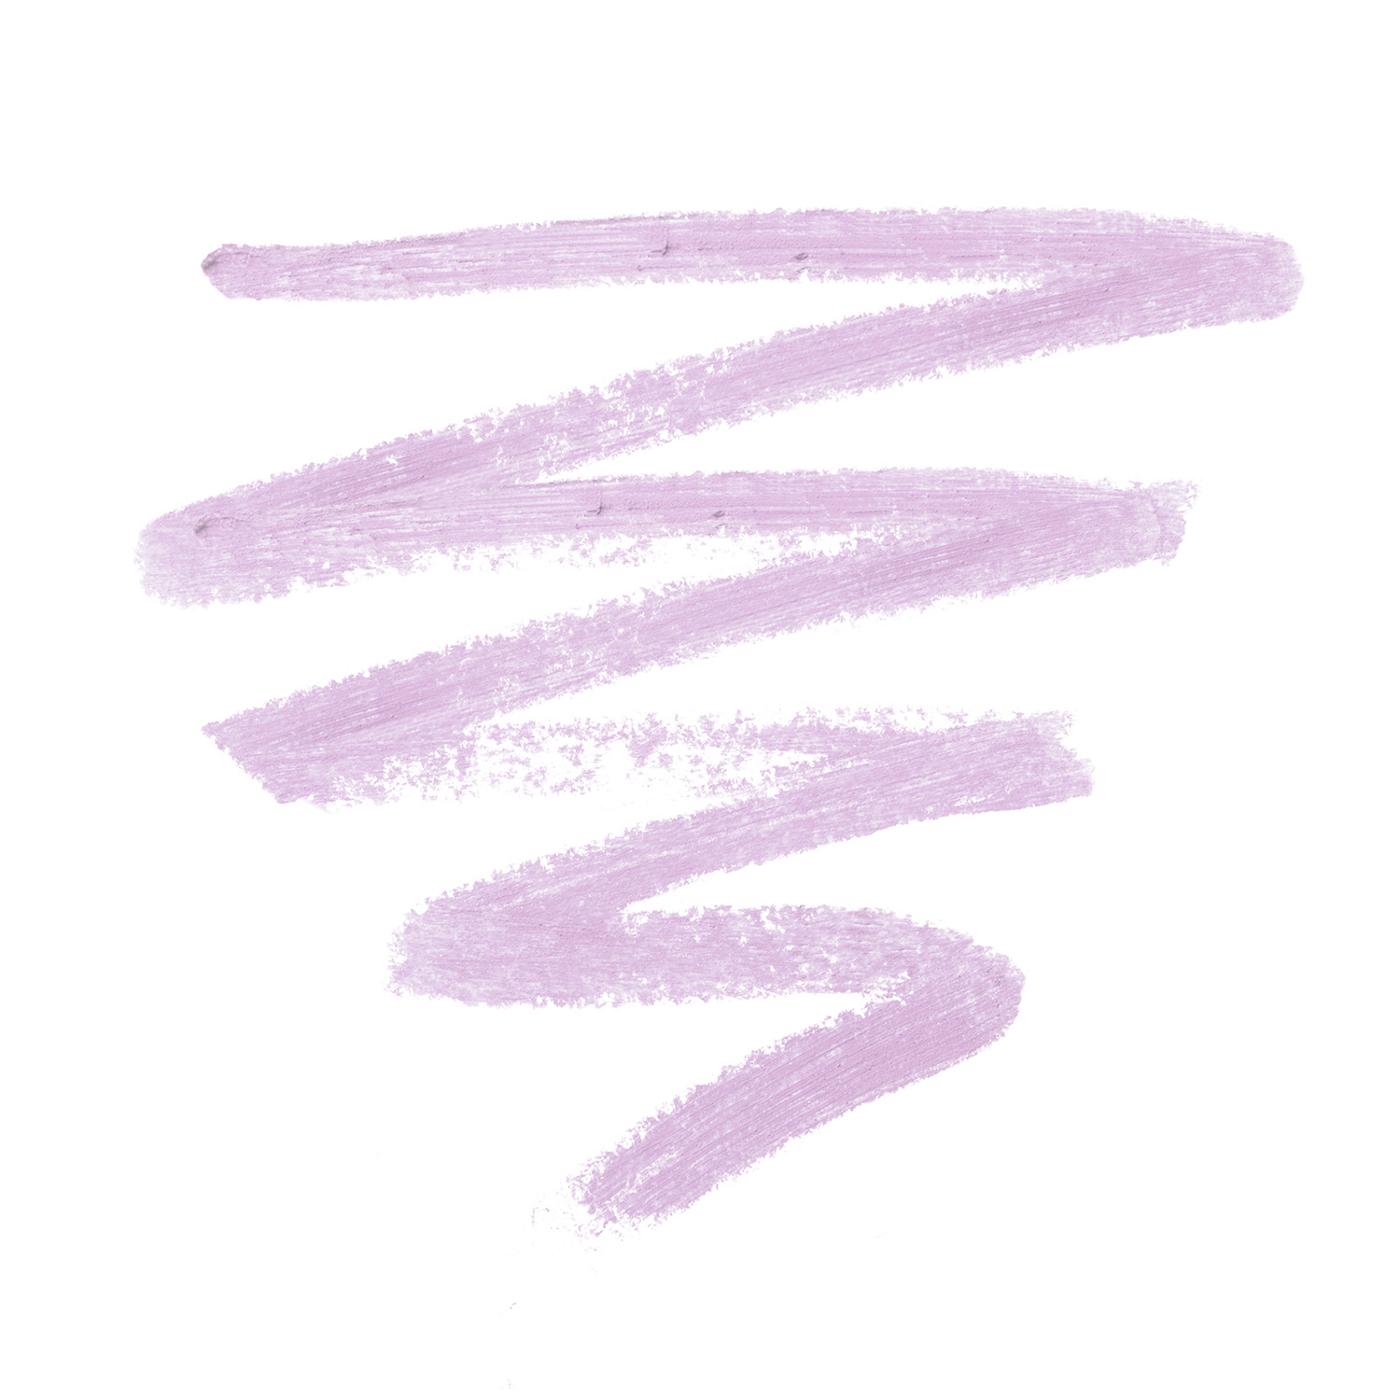 Pixi Endless Silky Eye Pen - Lush Lavender; image 3 of 3